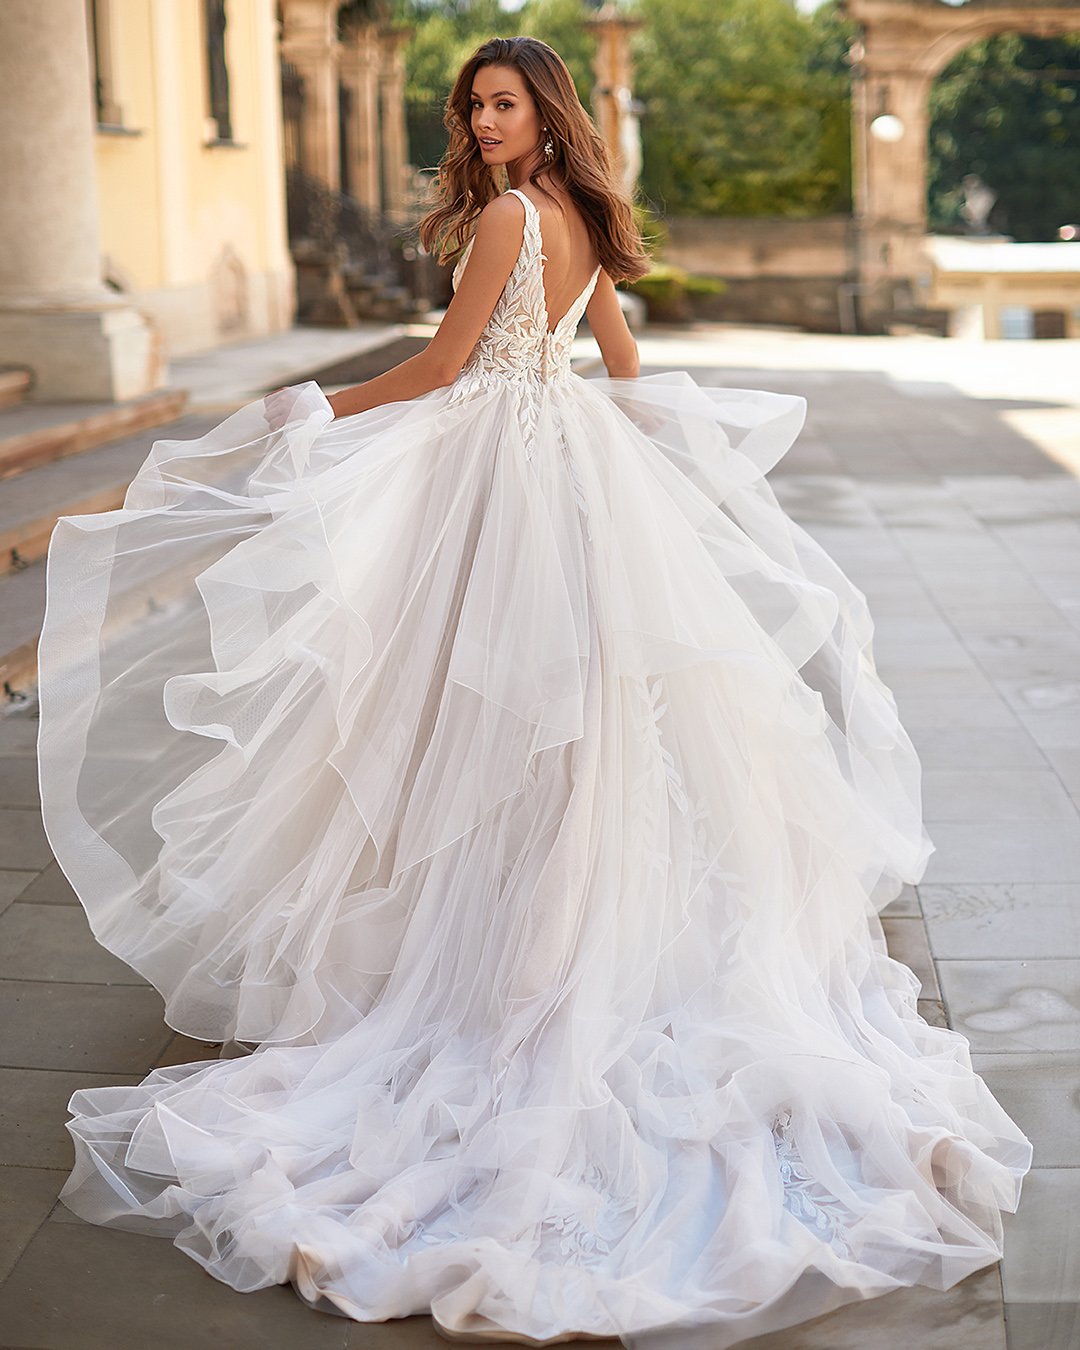 best wedding dresses princess ruffled skirt lace to moonlight